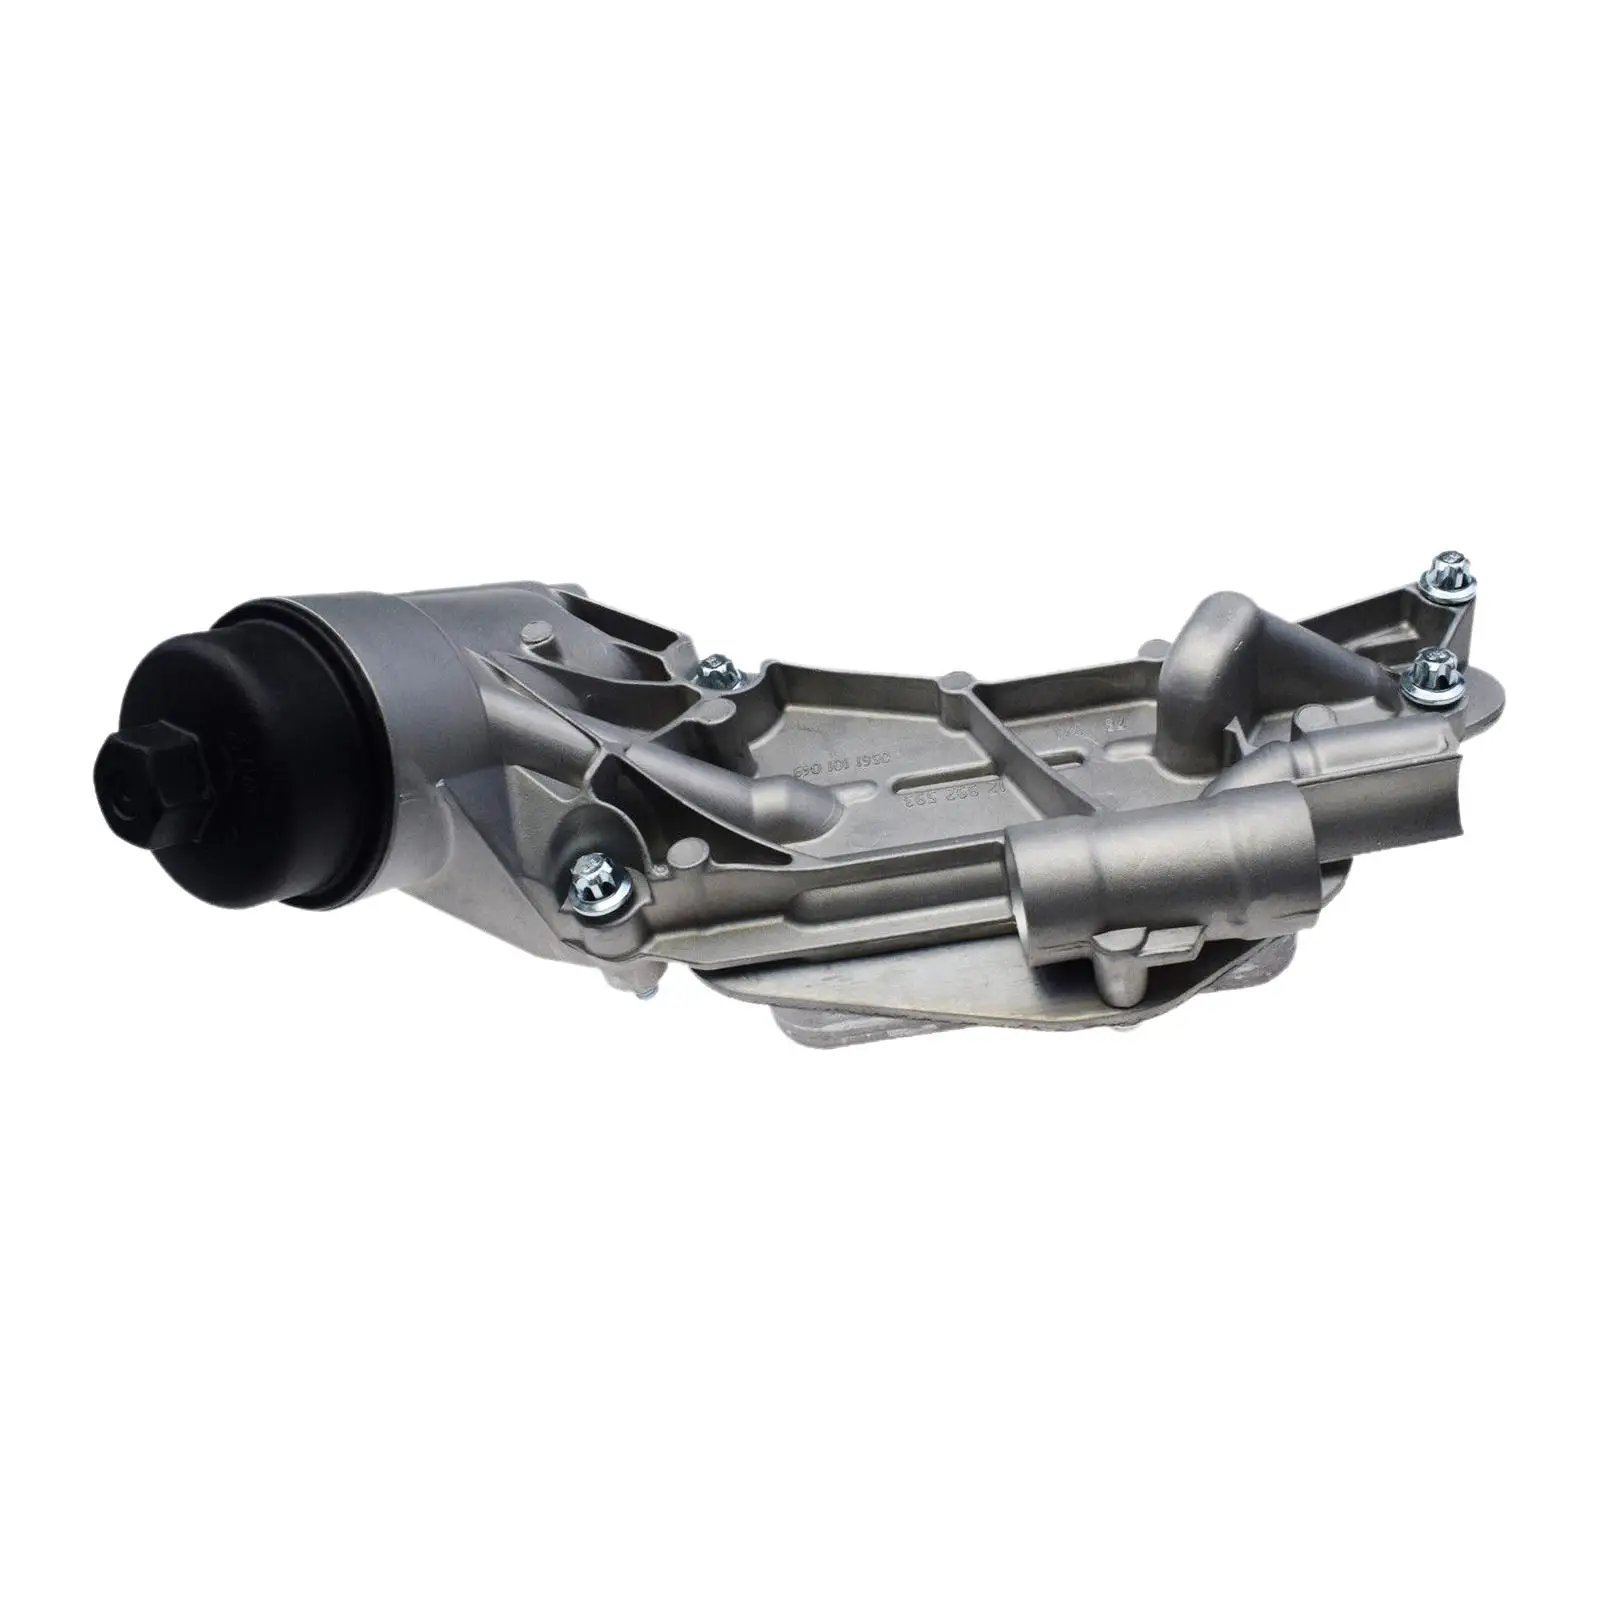 Oil Cooler Aluminium 93186324 for Chevrolet Cruze Vehicle Spare Parts